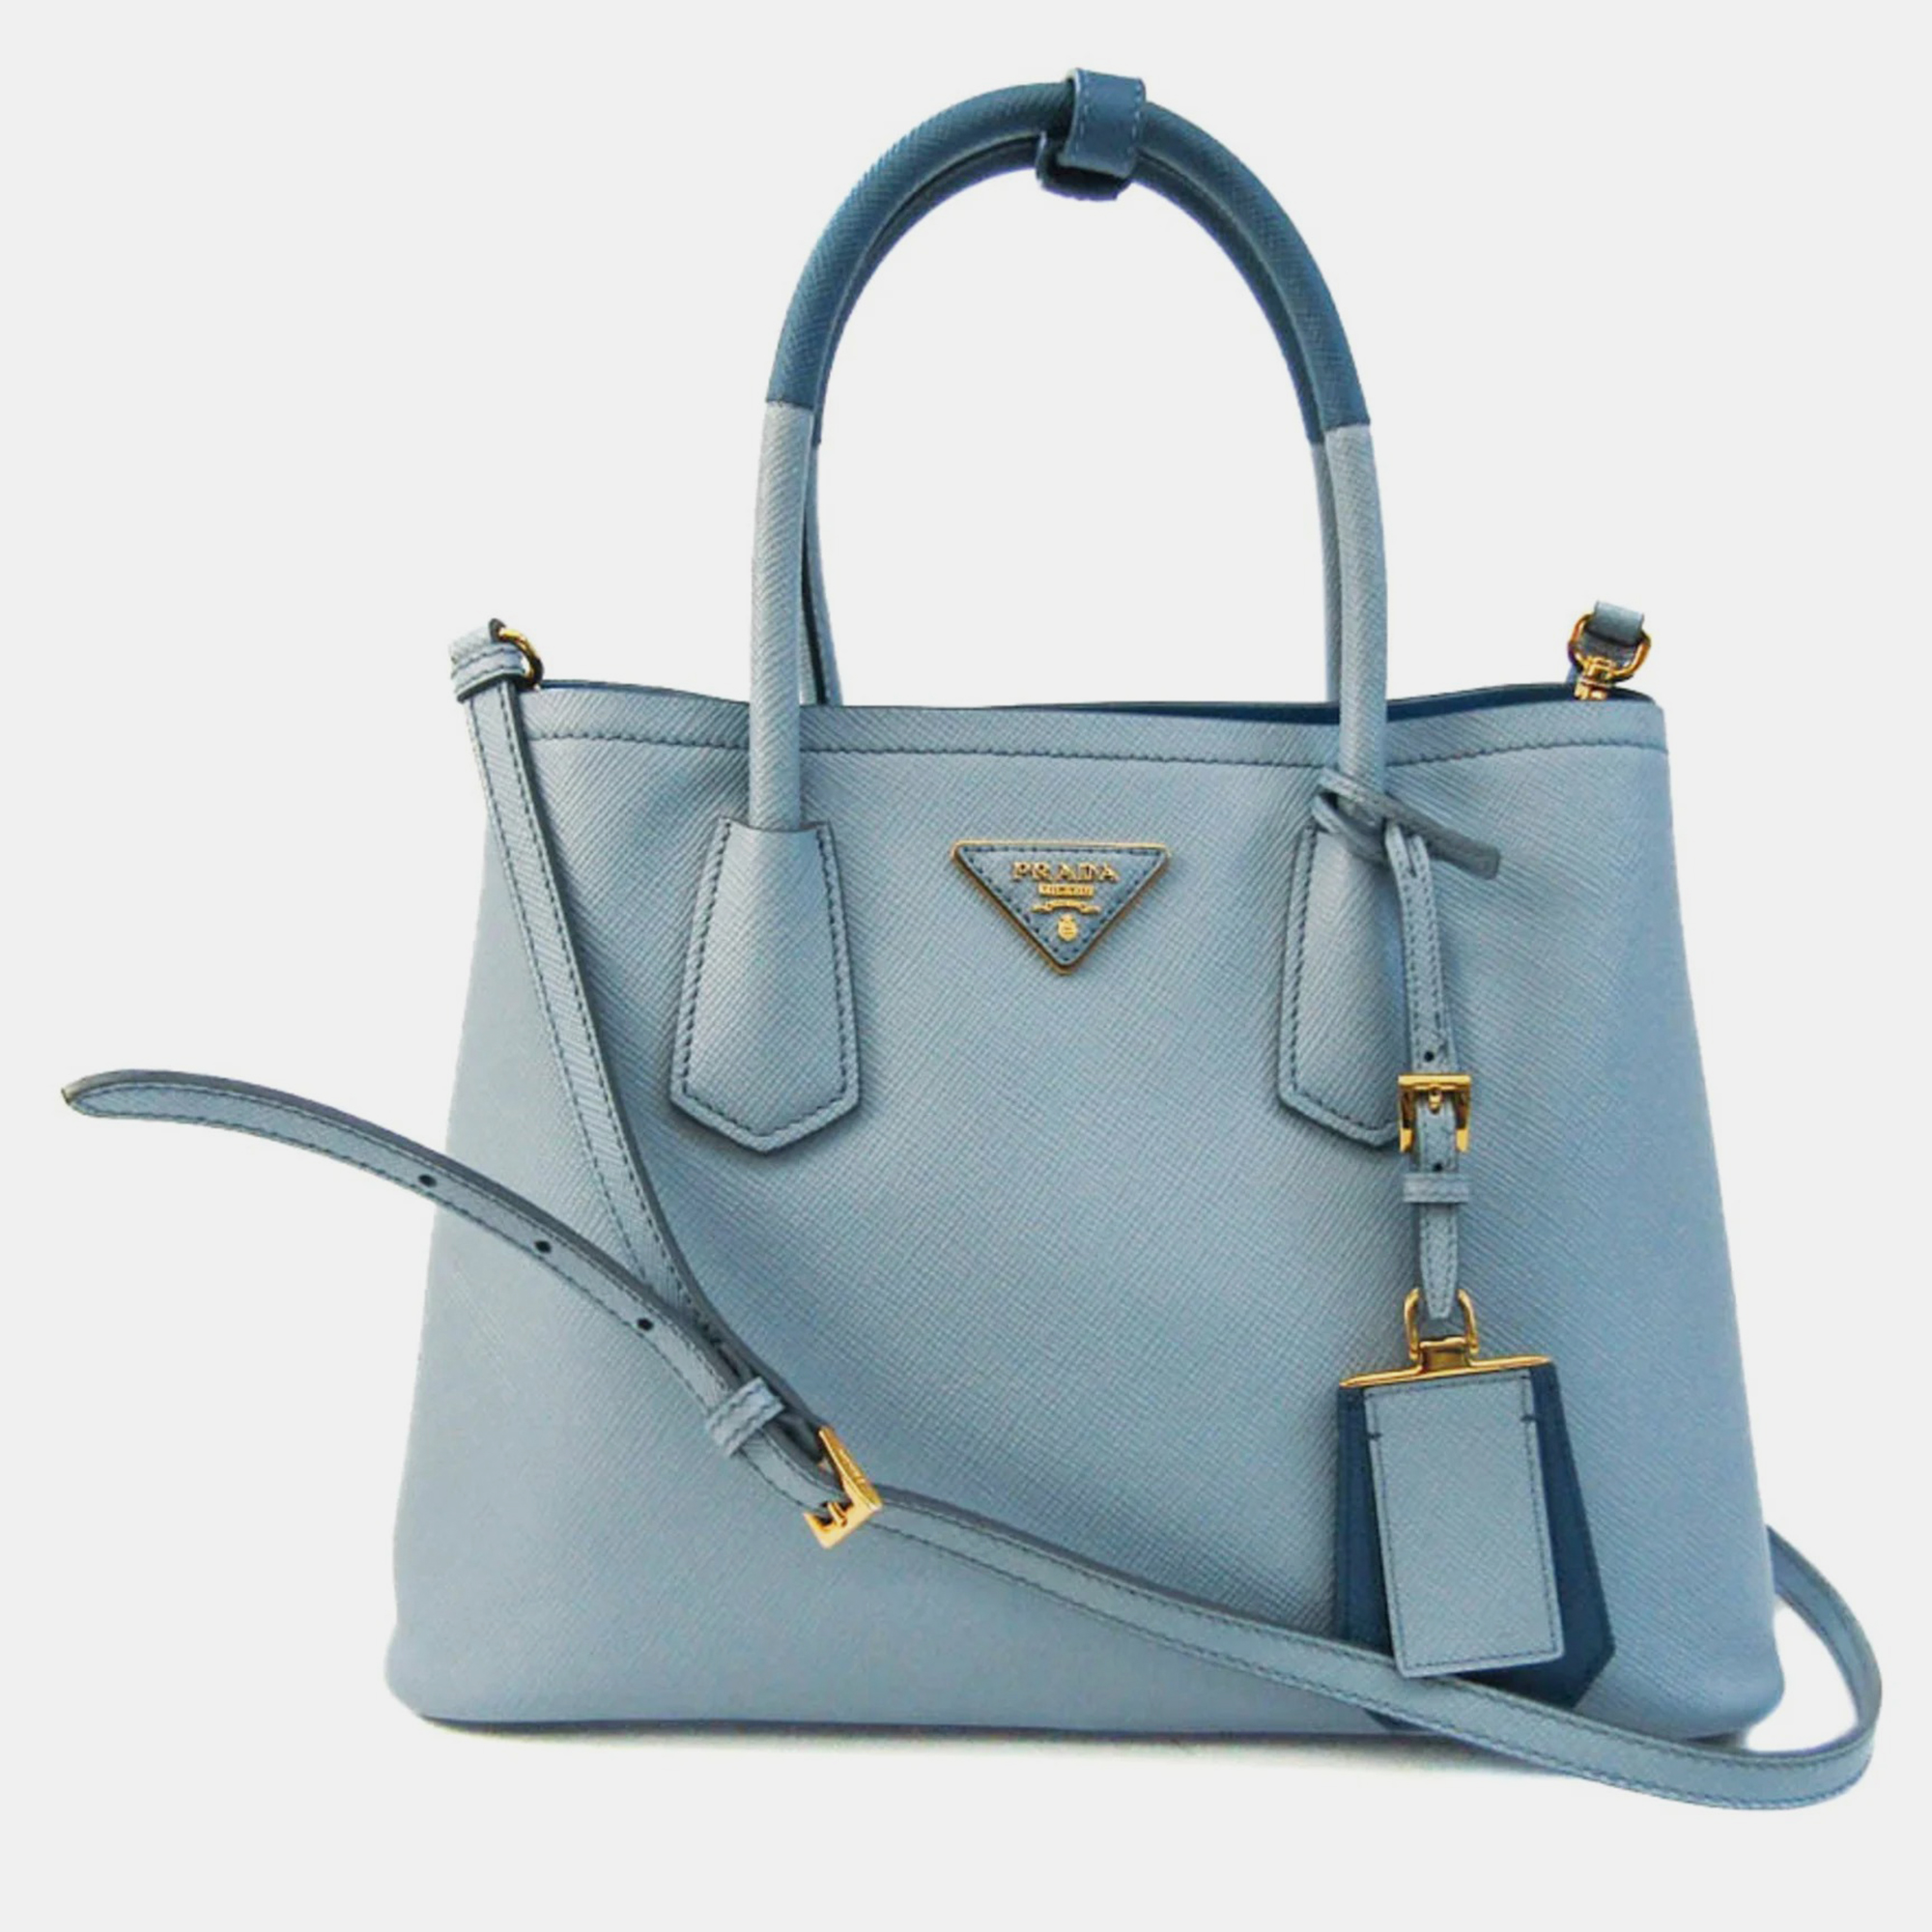 Prada blue saffiano leather small cuir tote bag